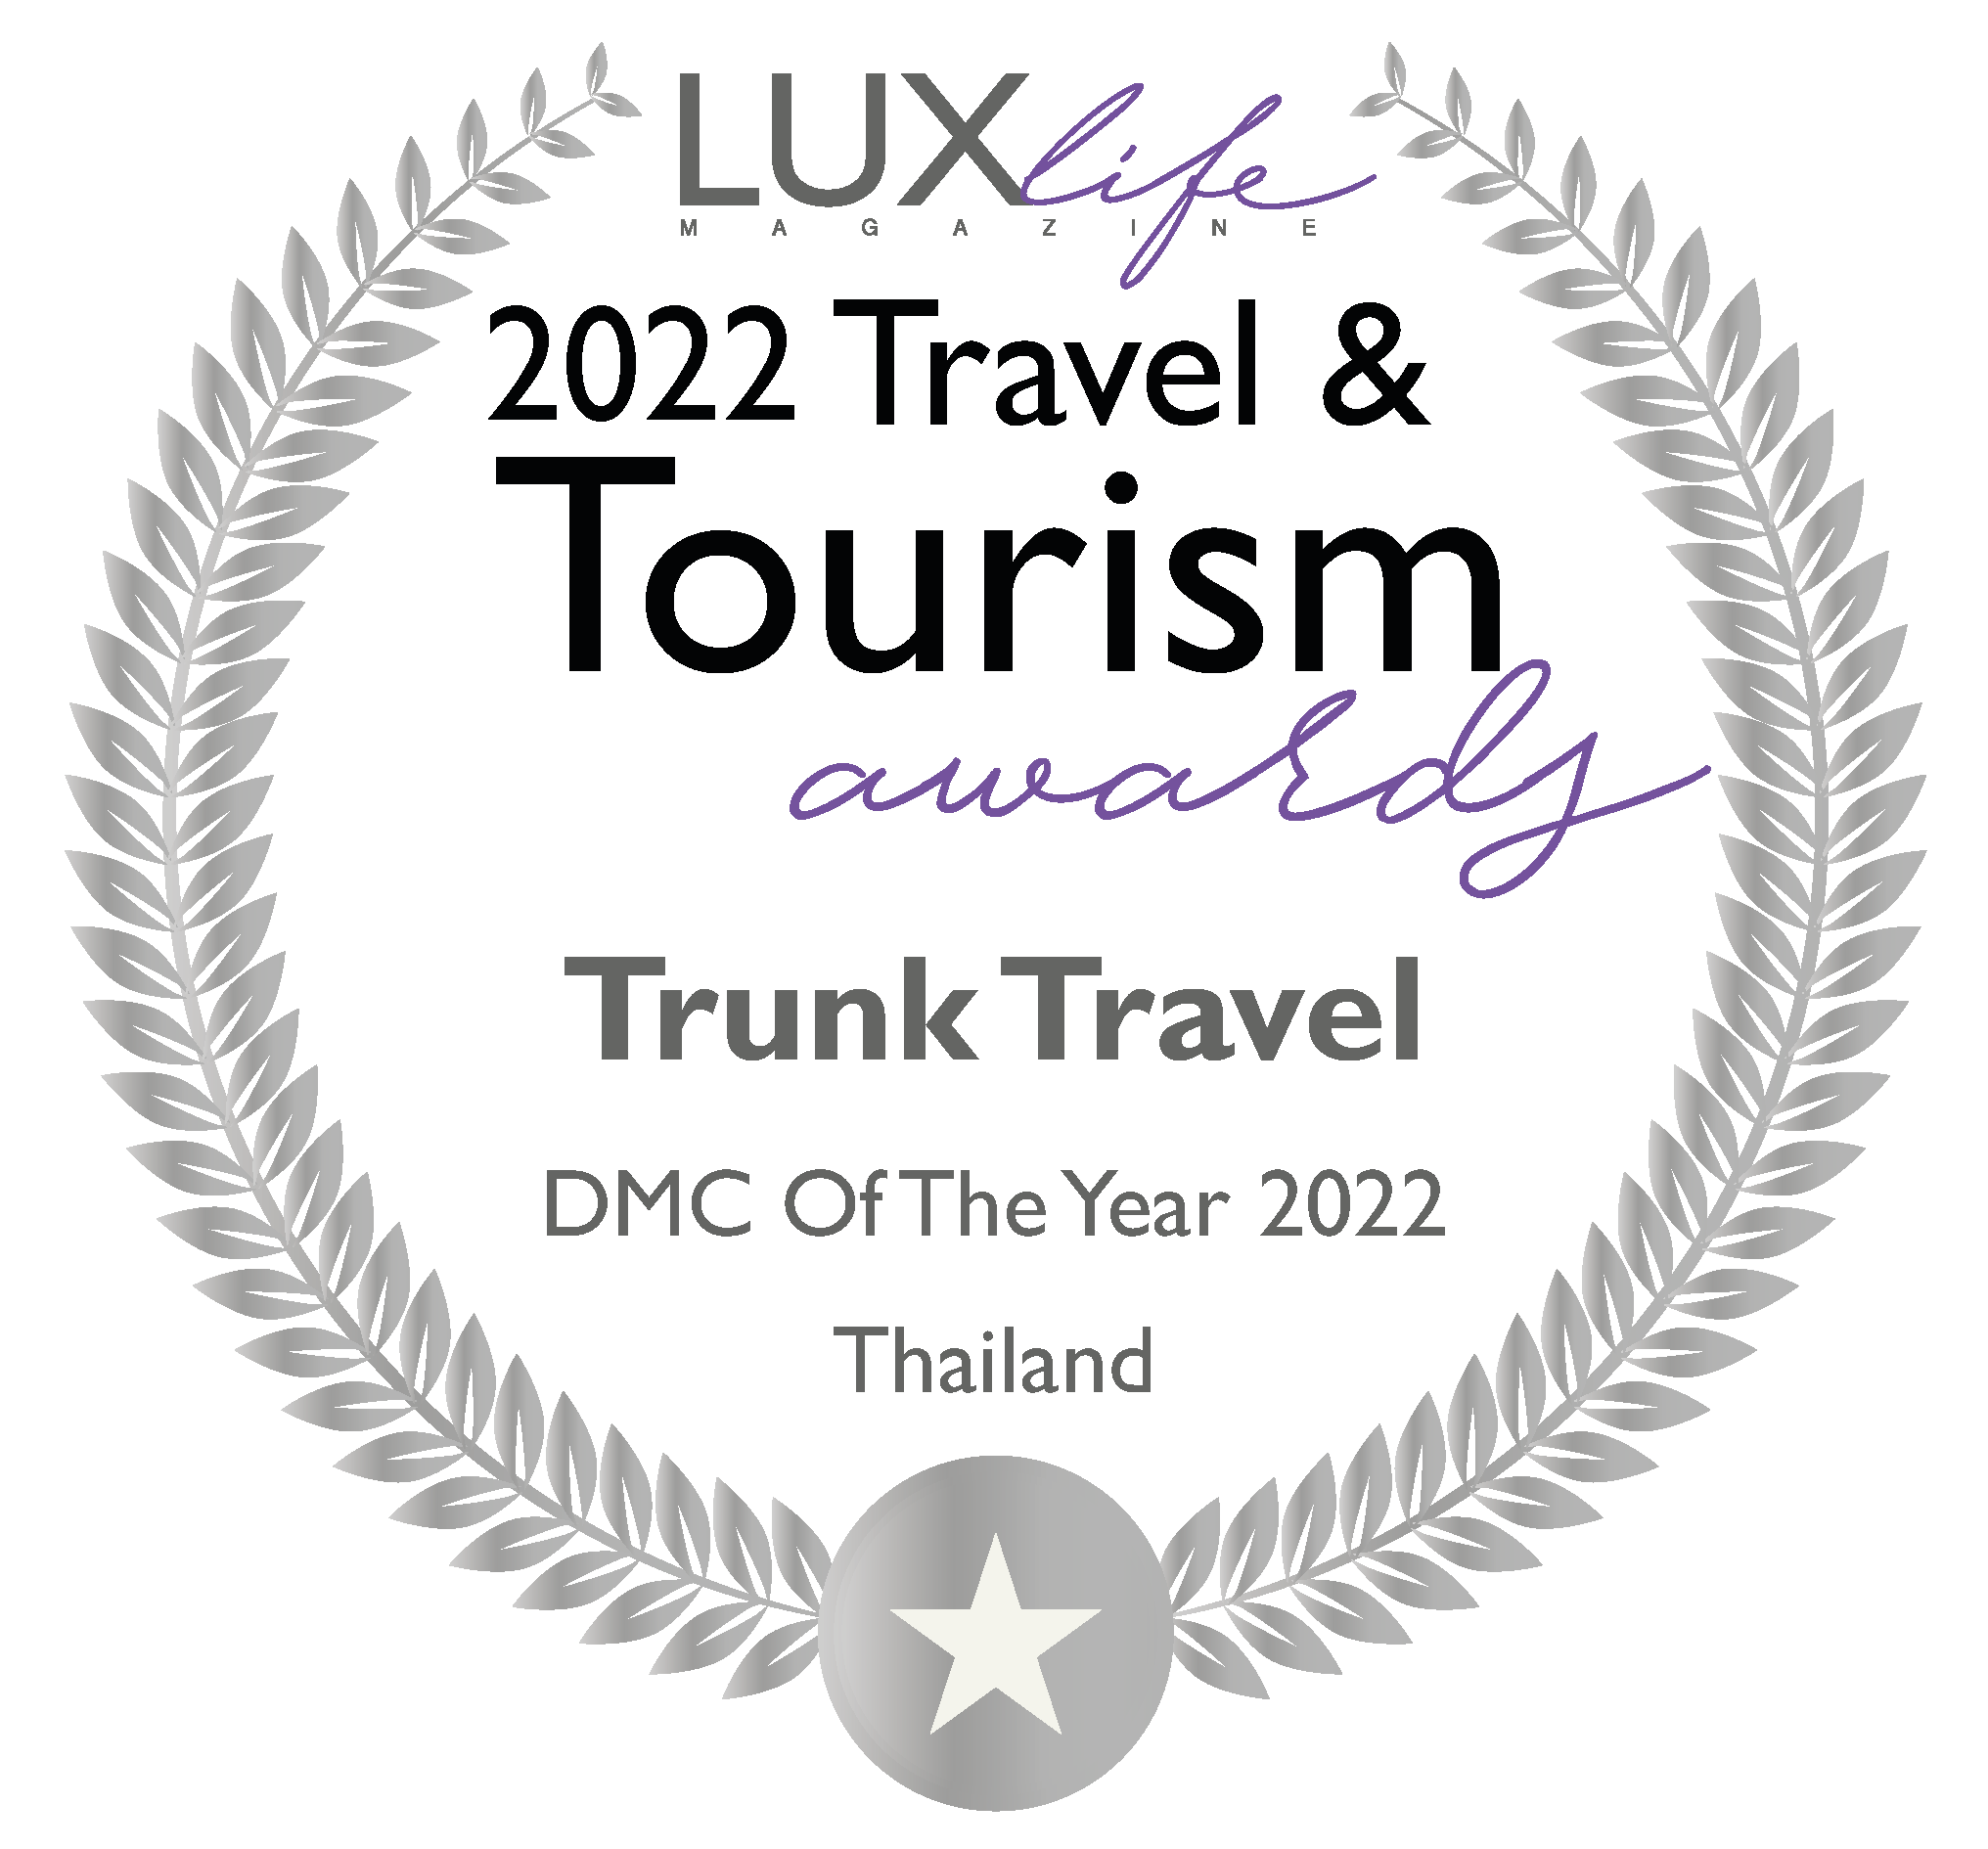 DMC of the Year - Thailand